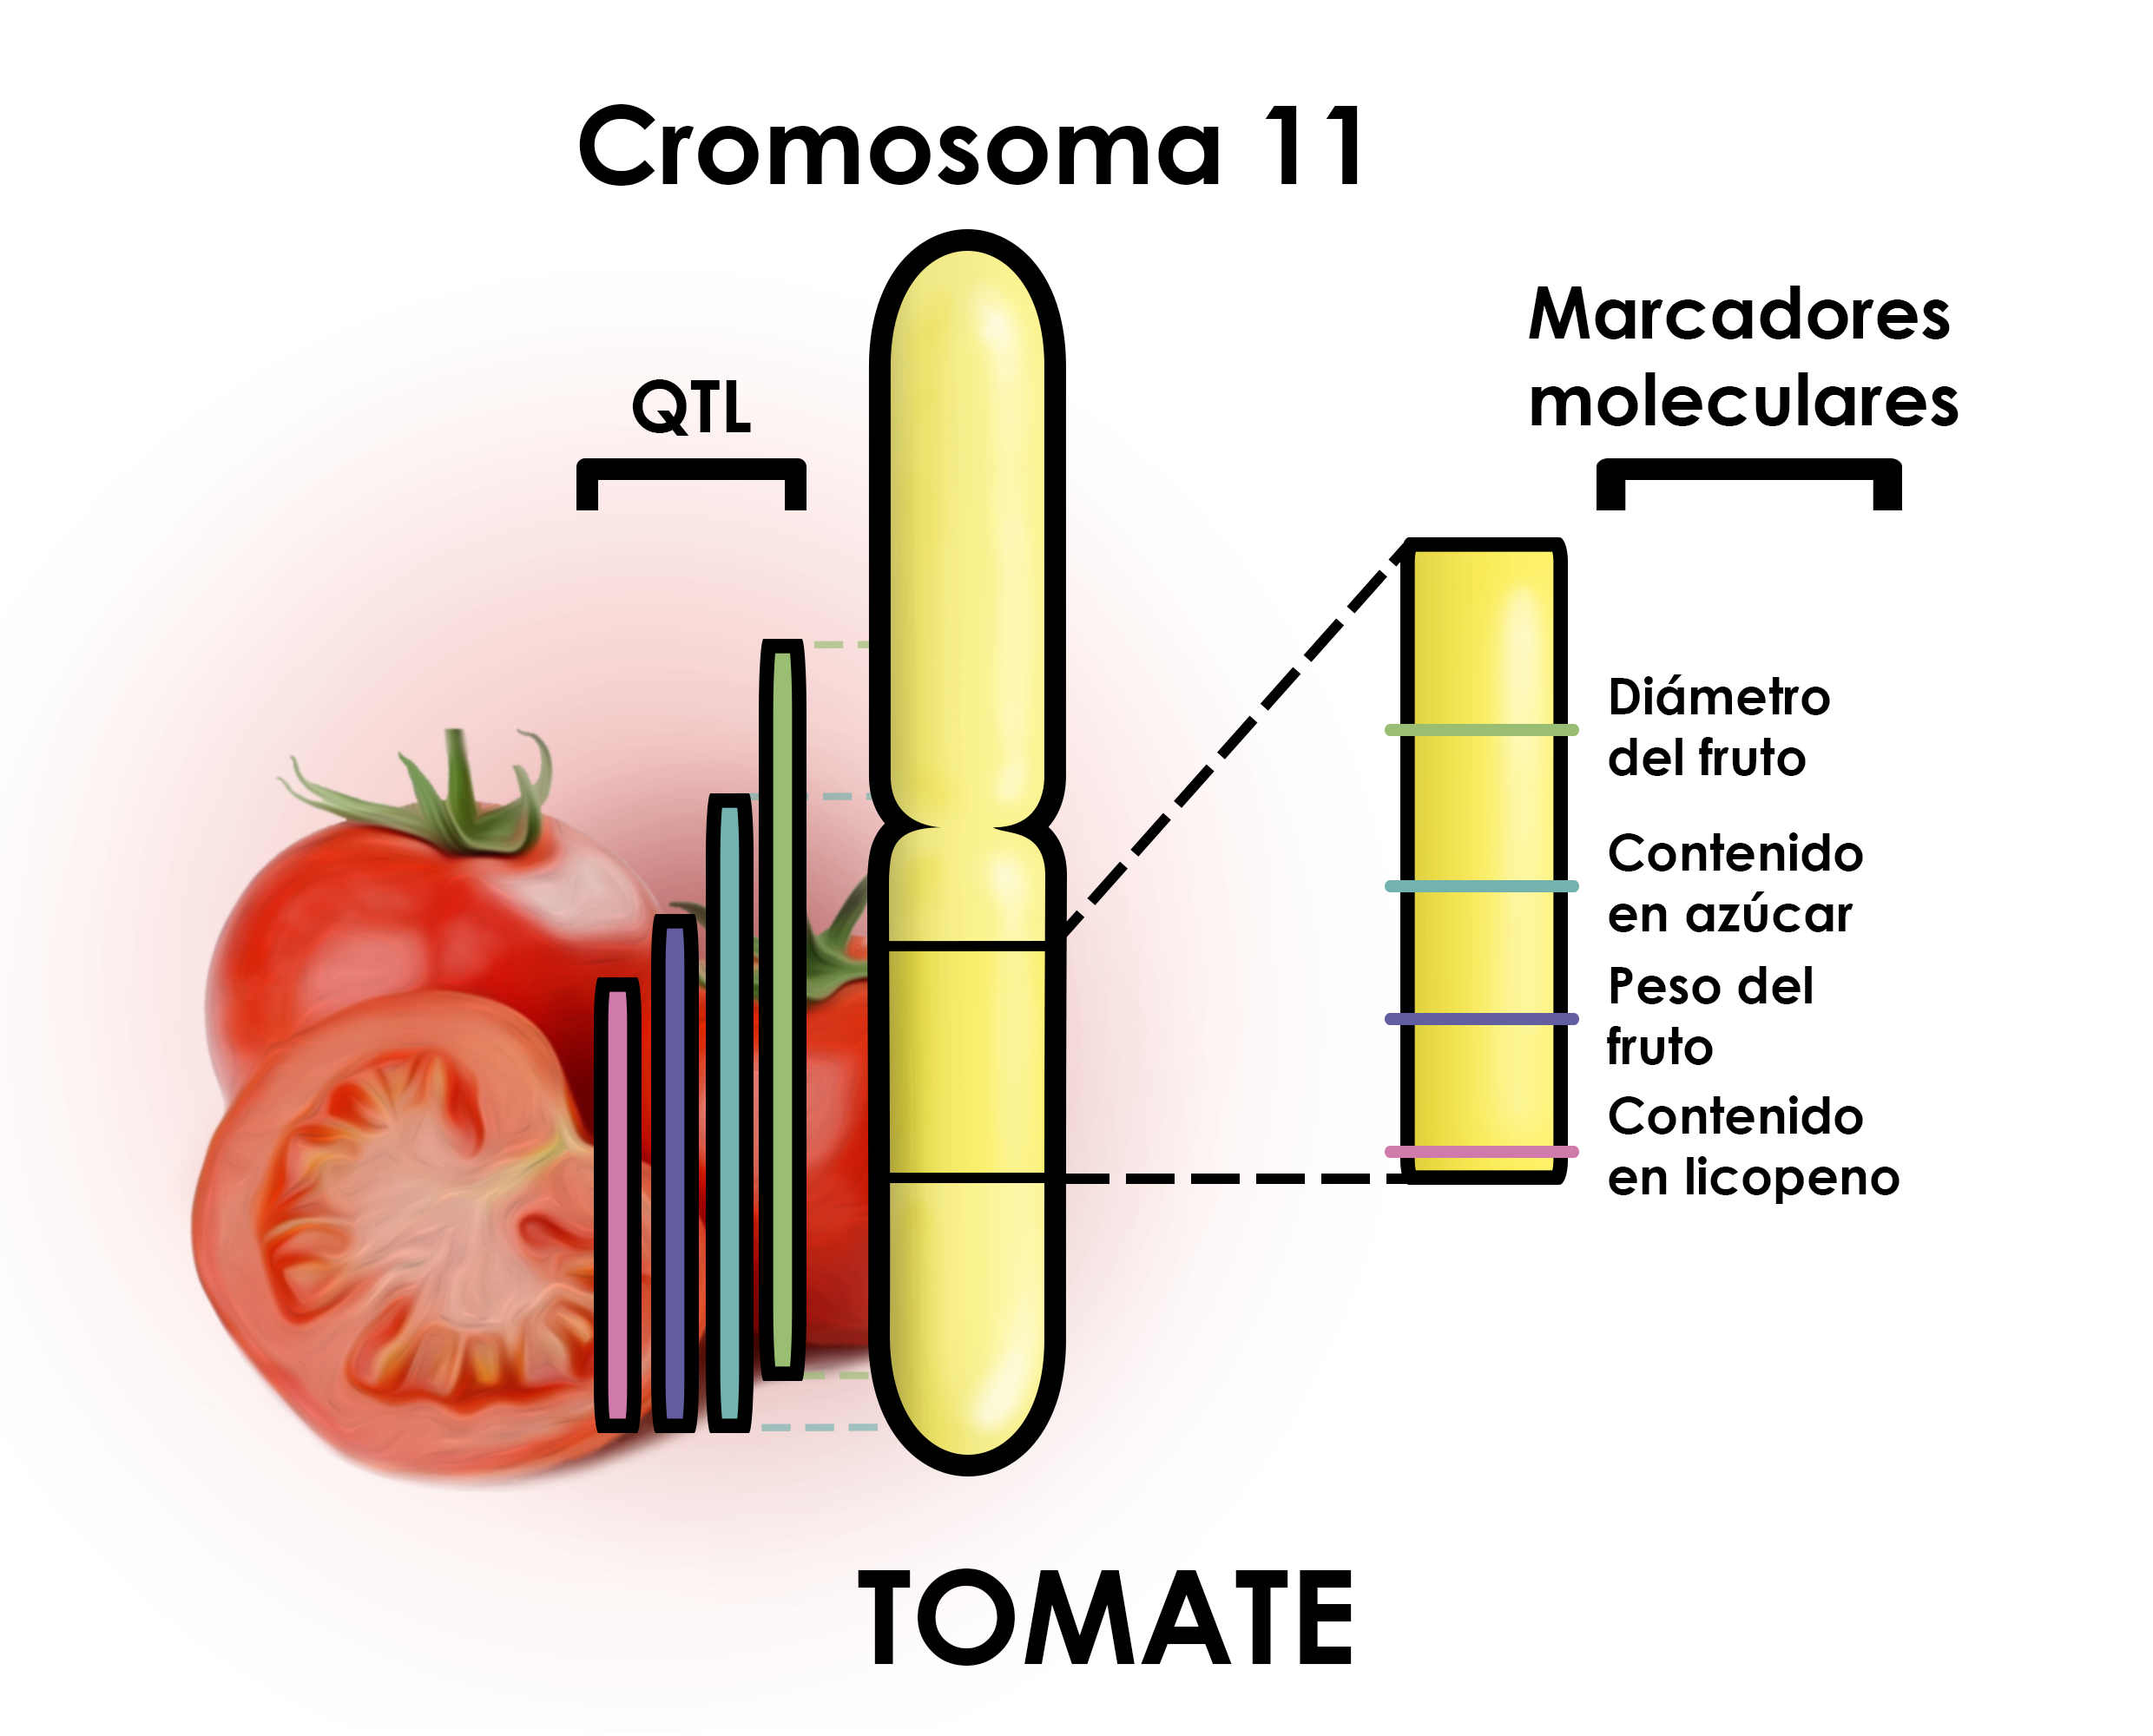 Mapa de varios QTL de interés en el cromosoma 11 del tomate. Información extraída de la base de datos de Sol Genomics Network (SGN).